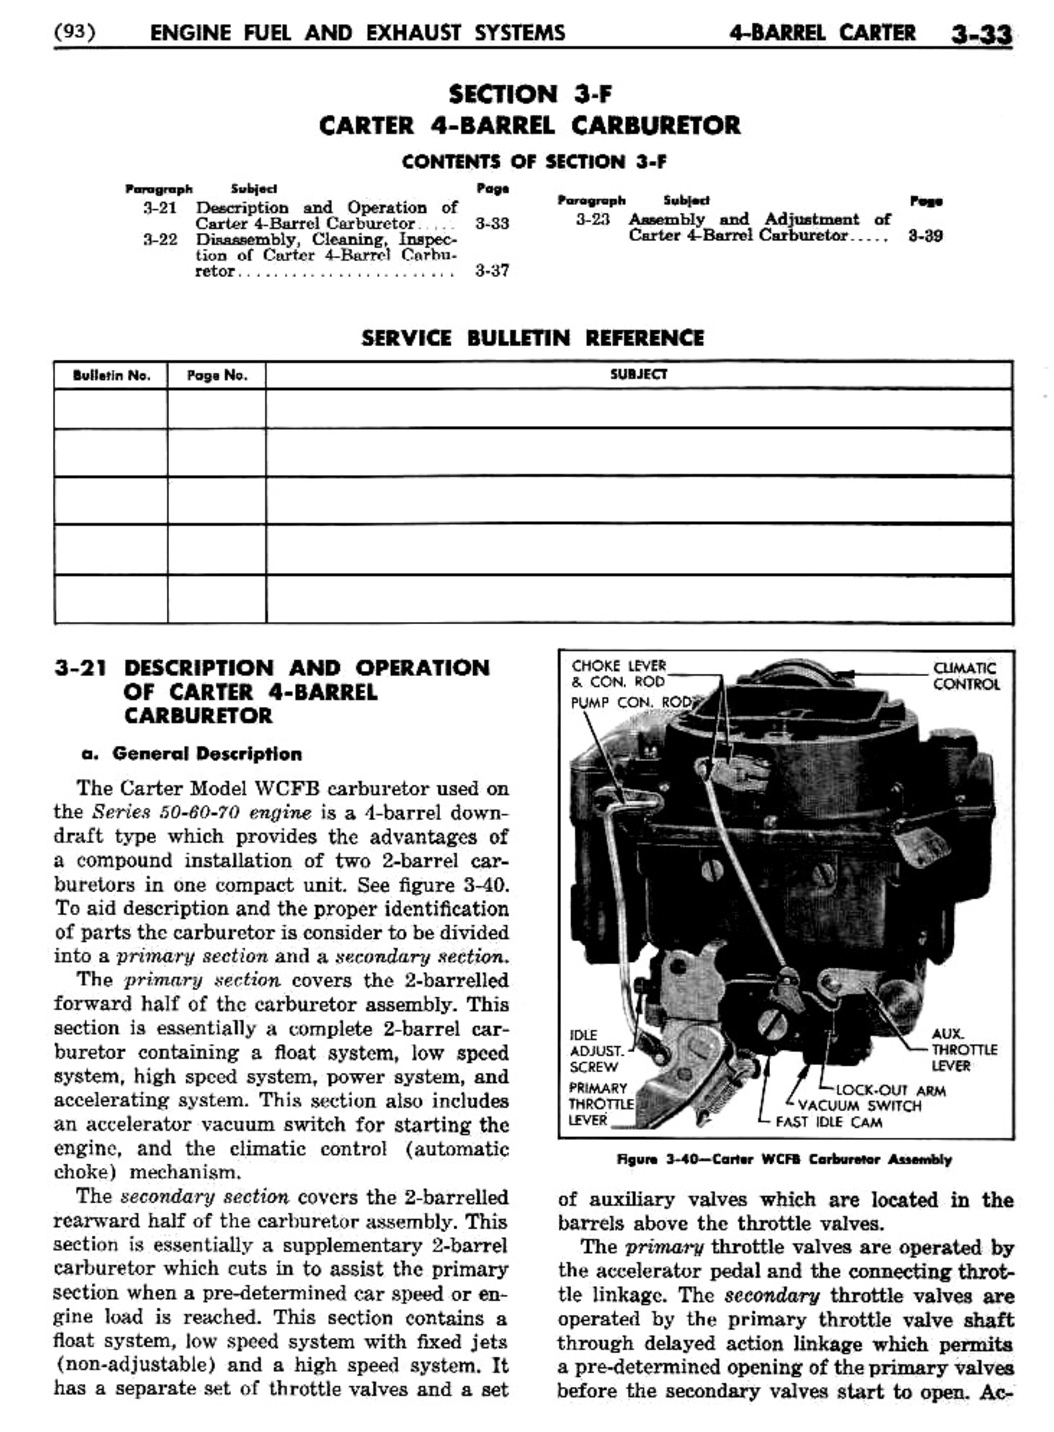 n_04 1955 Buick Shop Manual - Engine Fuel & Exhaust-033-033.jpg